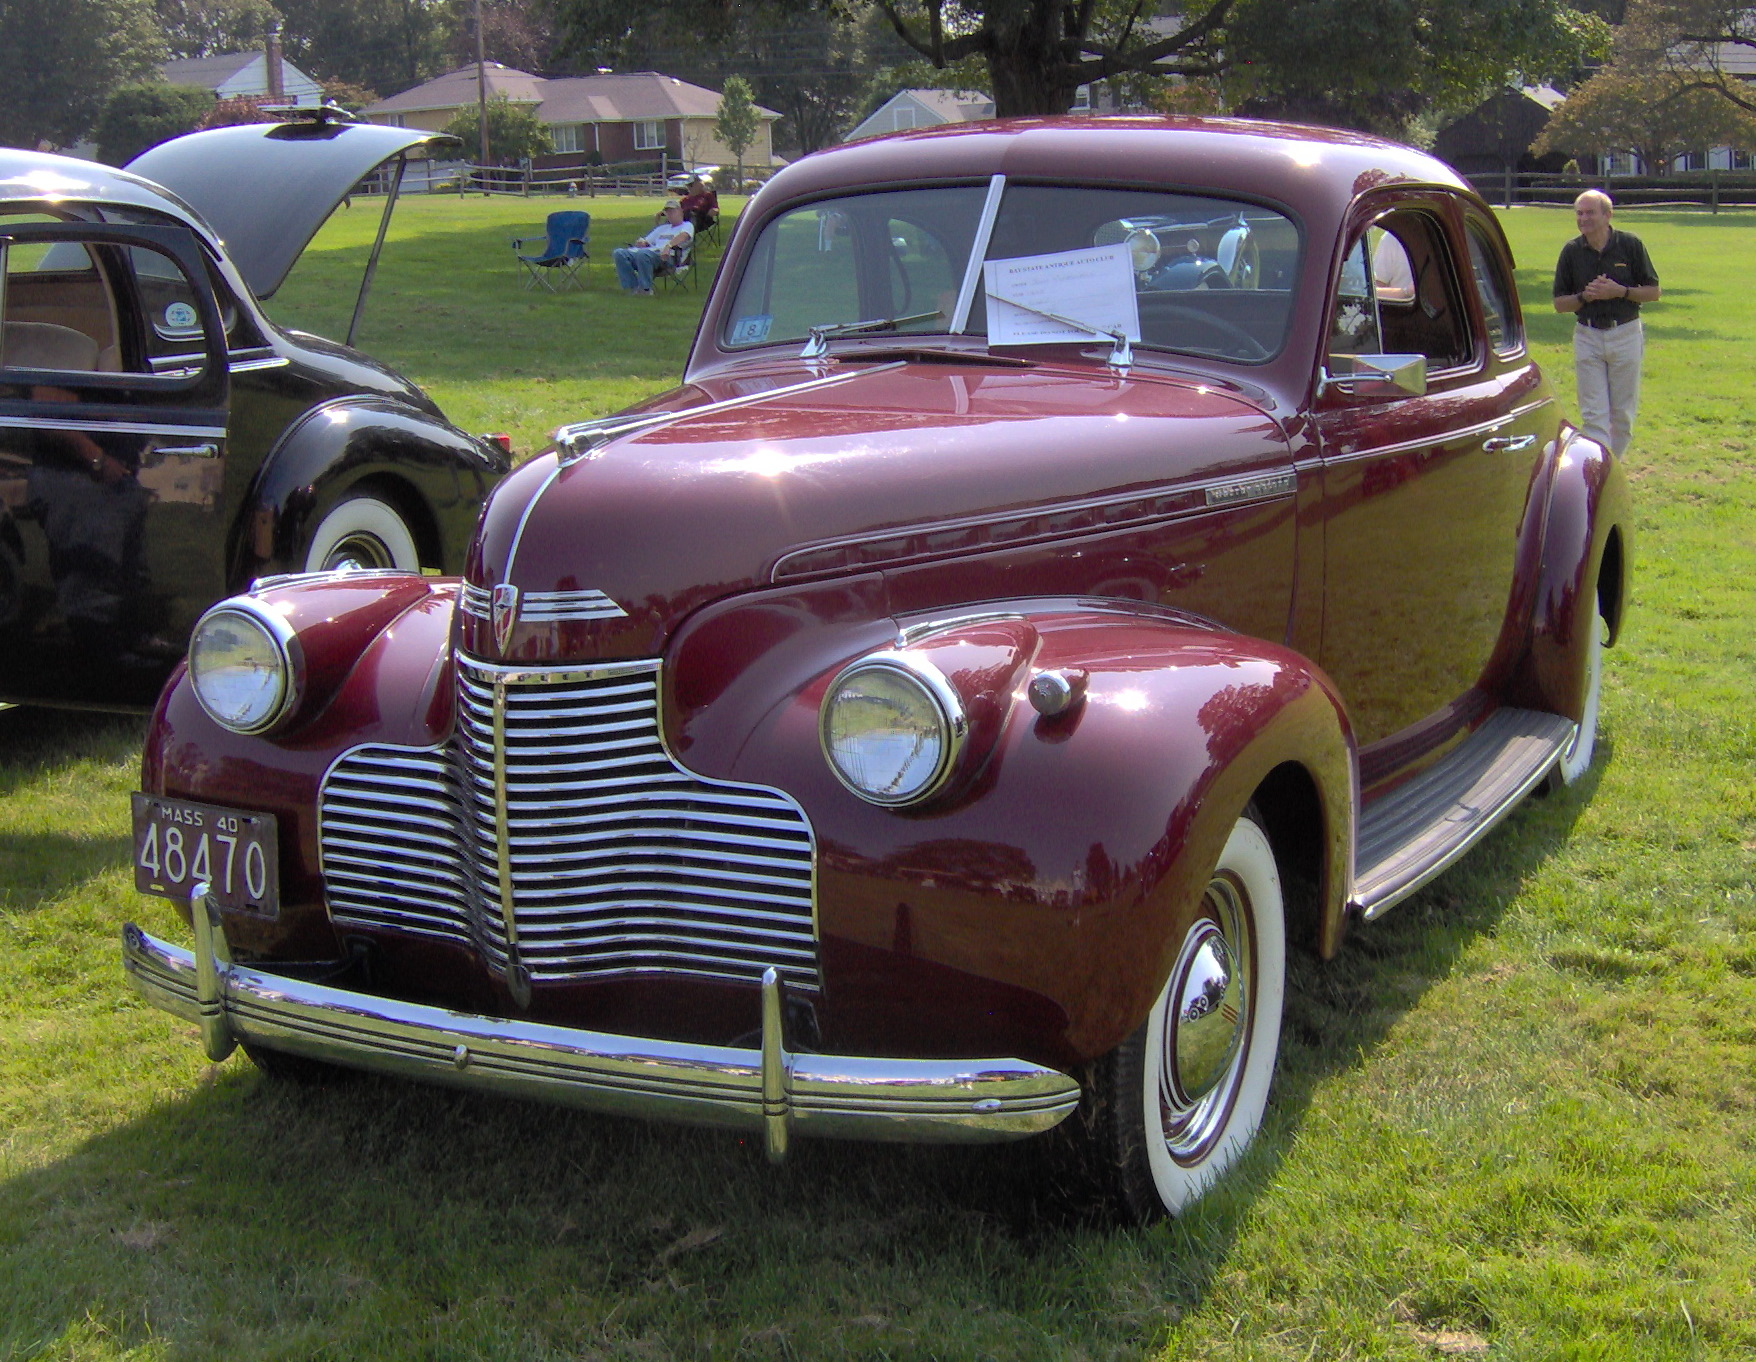 1940 Chevrolet Backgrounds, Compatible - PC, Mobile, Gadgets| 1756x1362 px